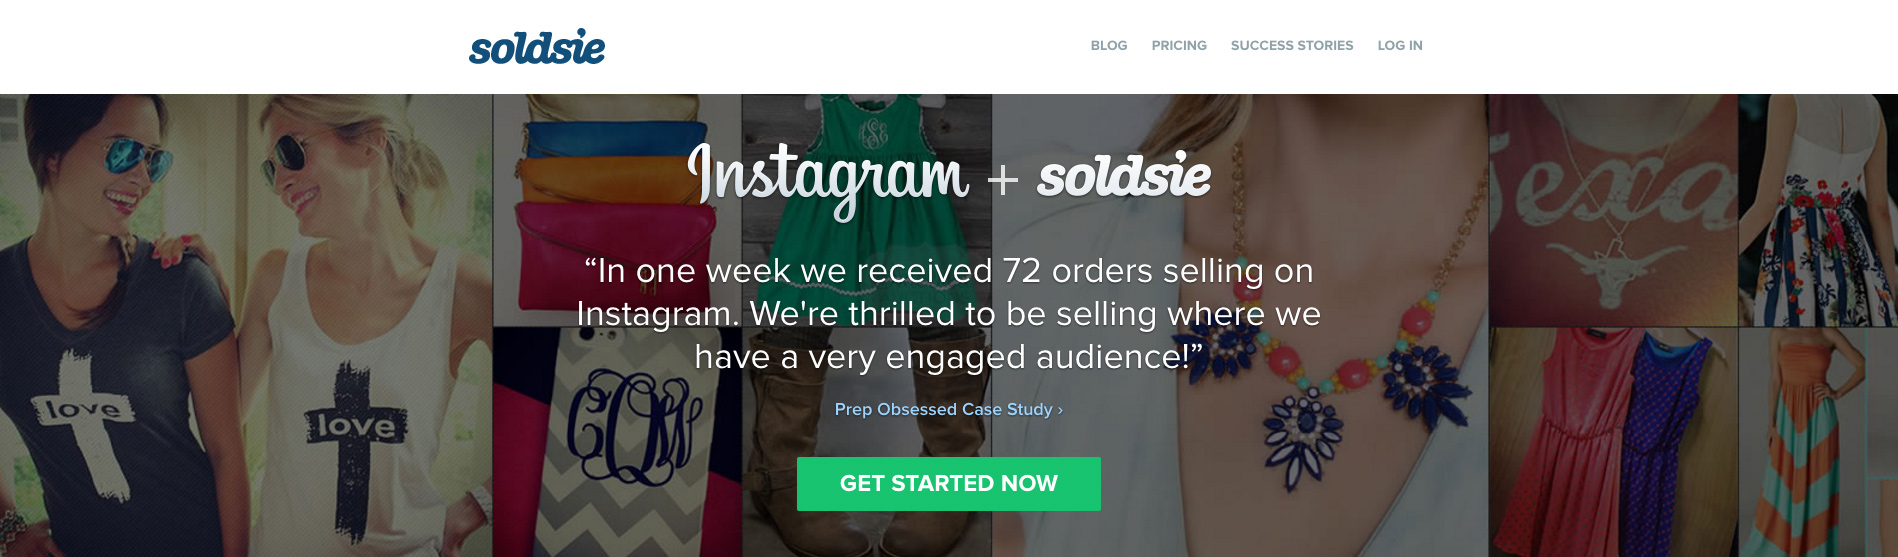 Instagram and soldsie online app